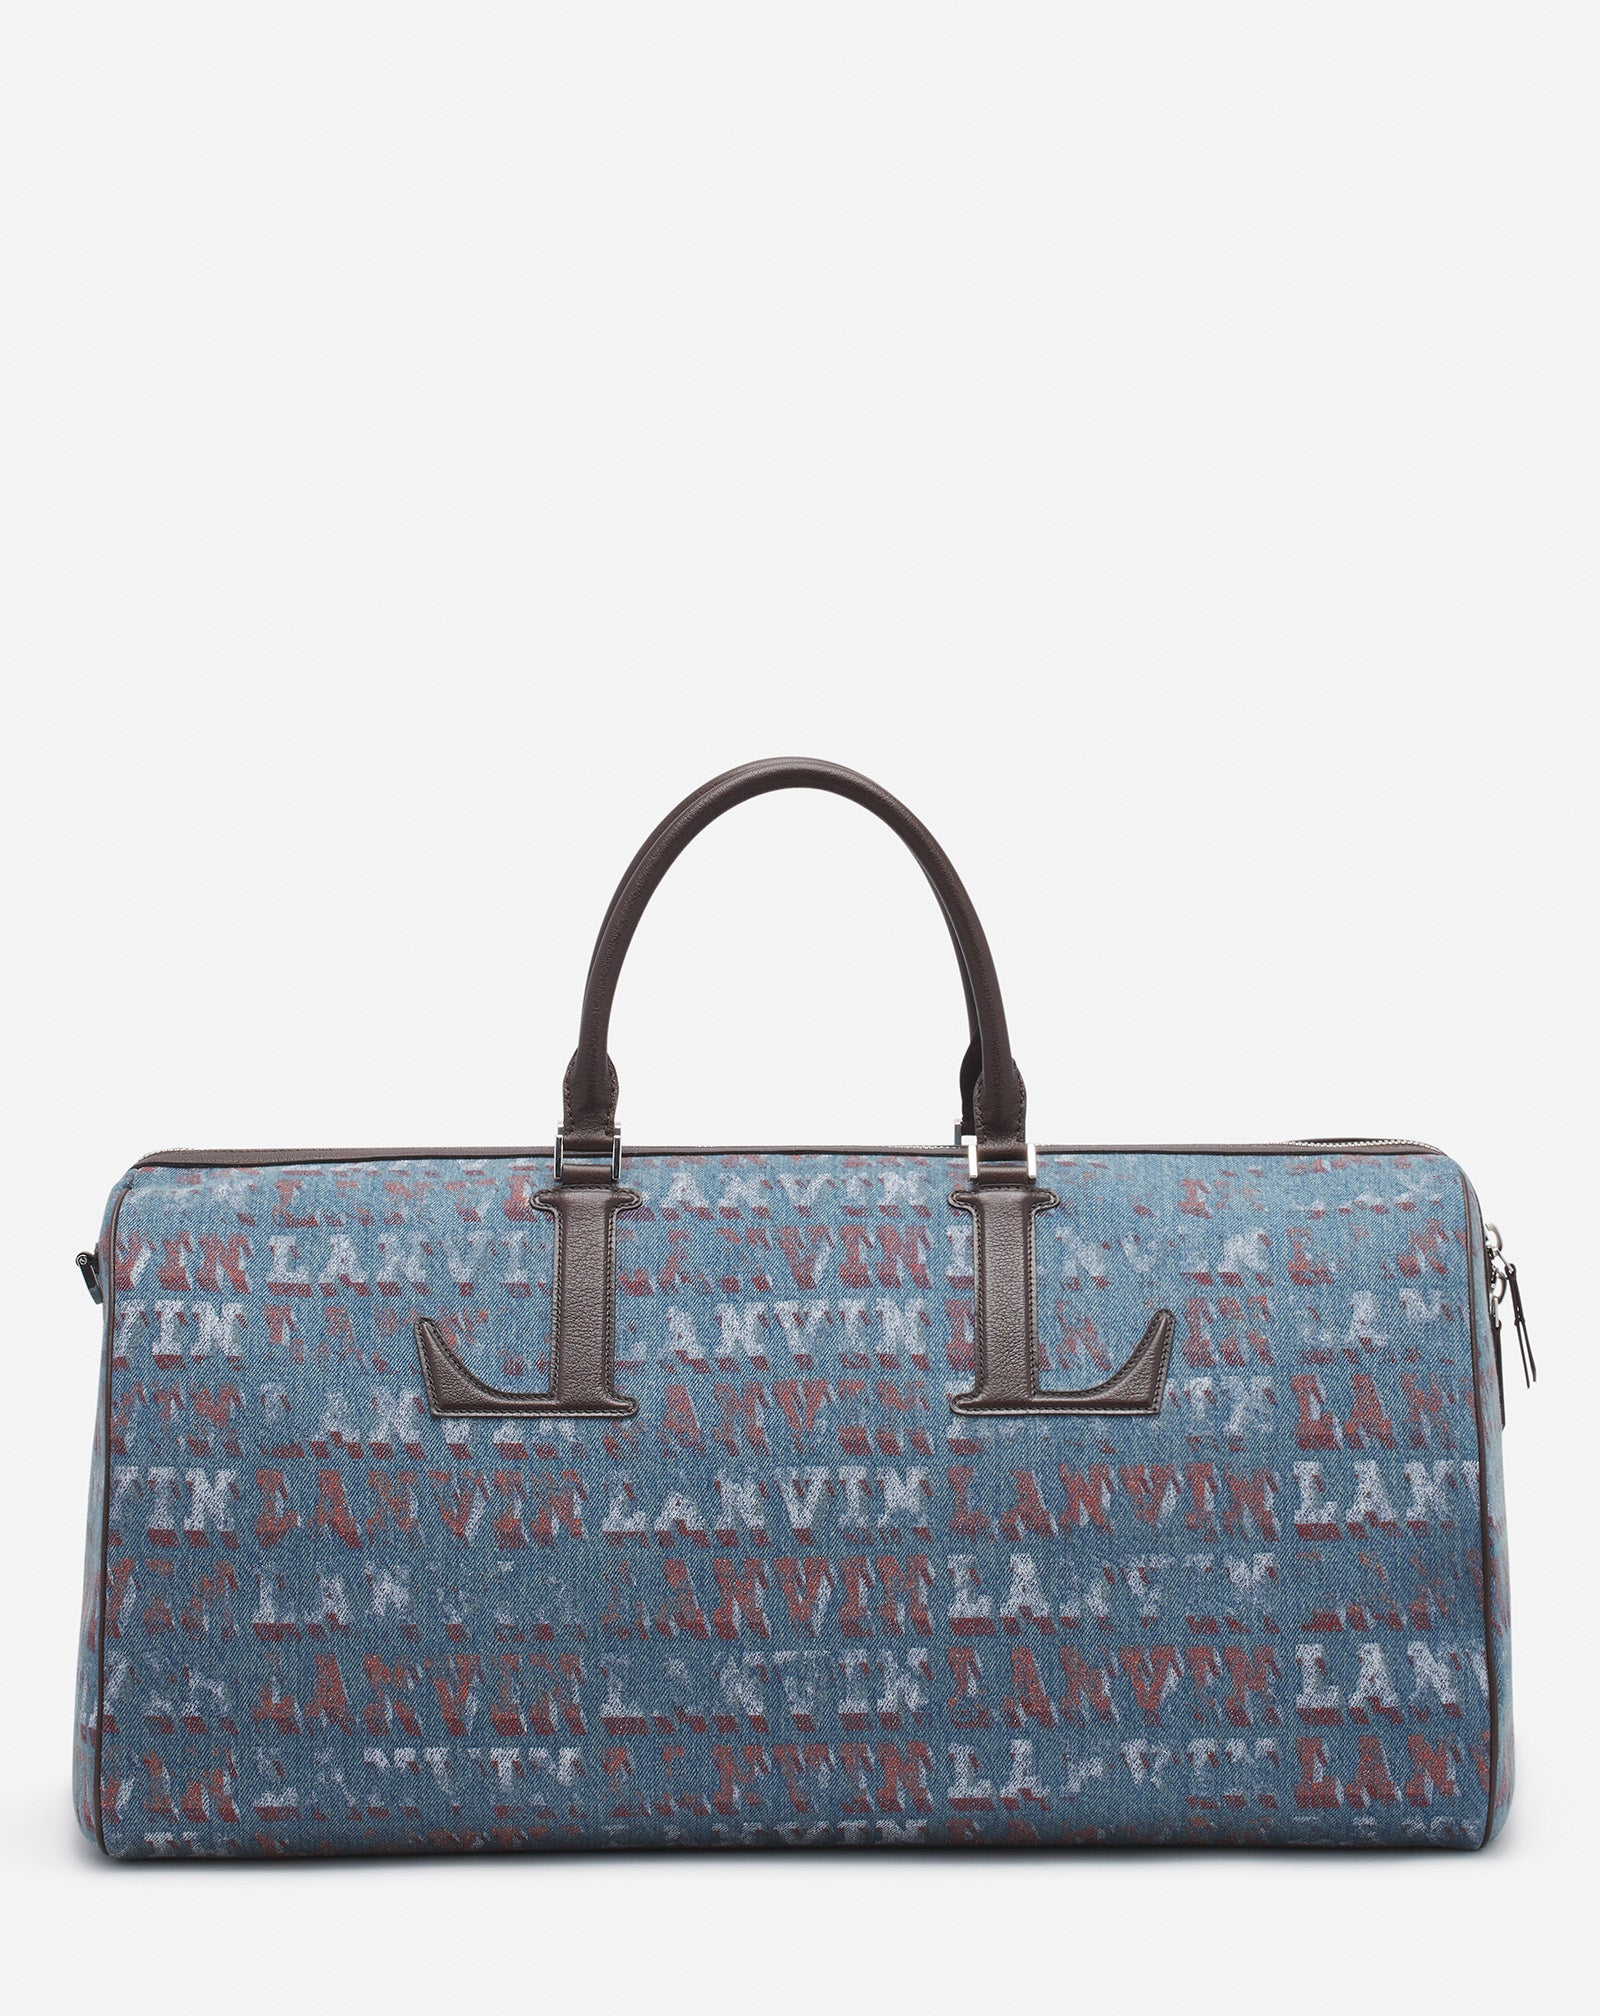 Lanvin x future denim travel bag with lanvin logo print